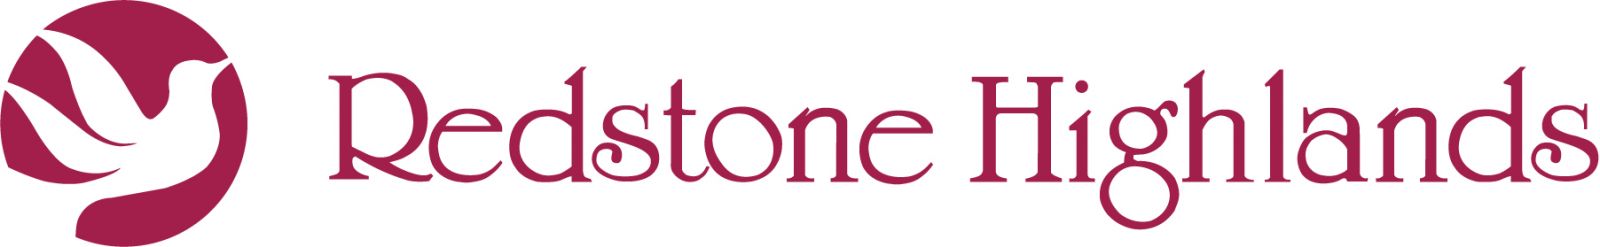 Redstone logosu pms208